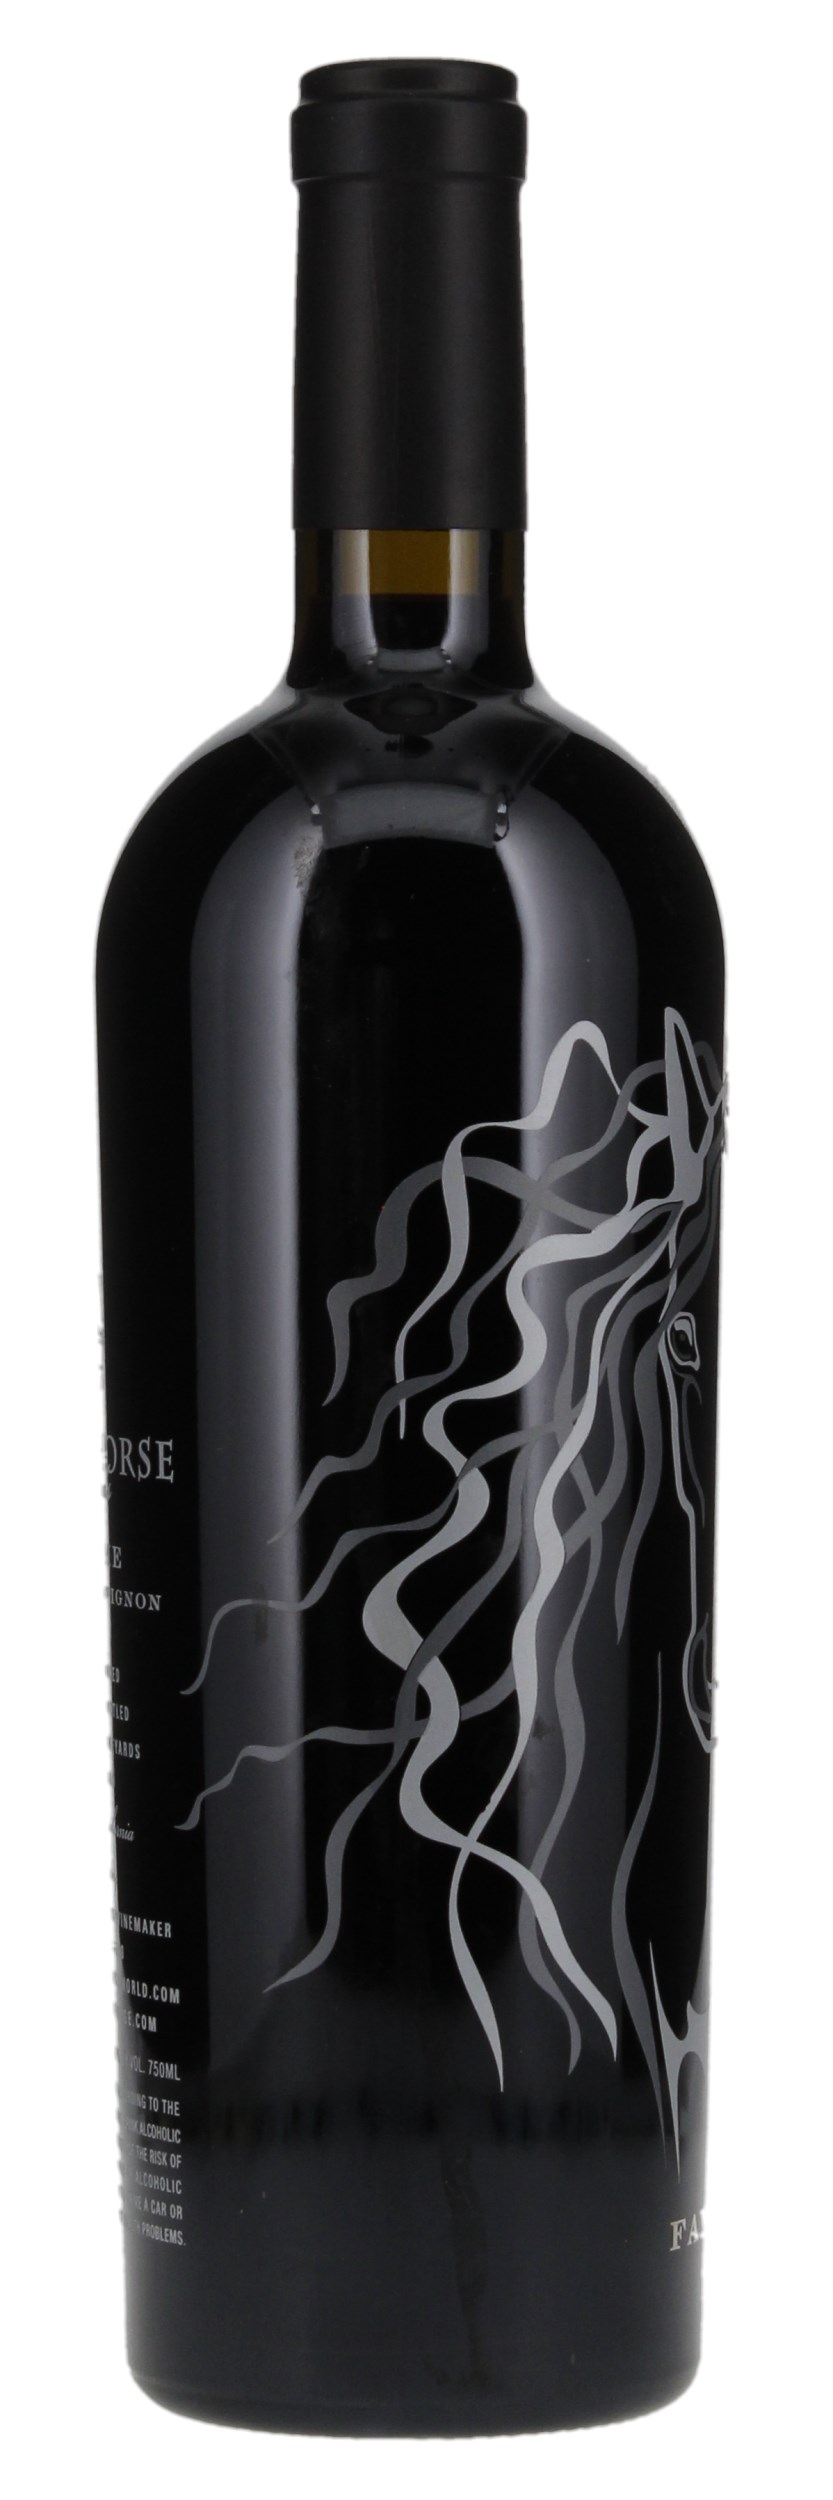 2014 Ghost Horse Vineyard Fantome Cabernet Sauvignon, 750ml